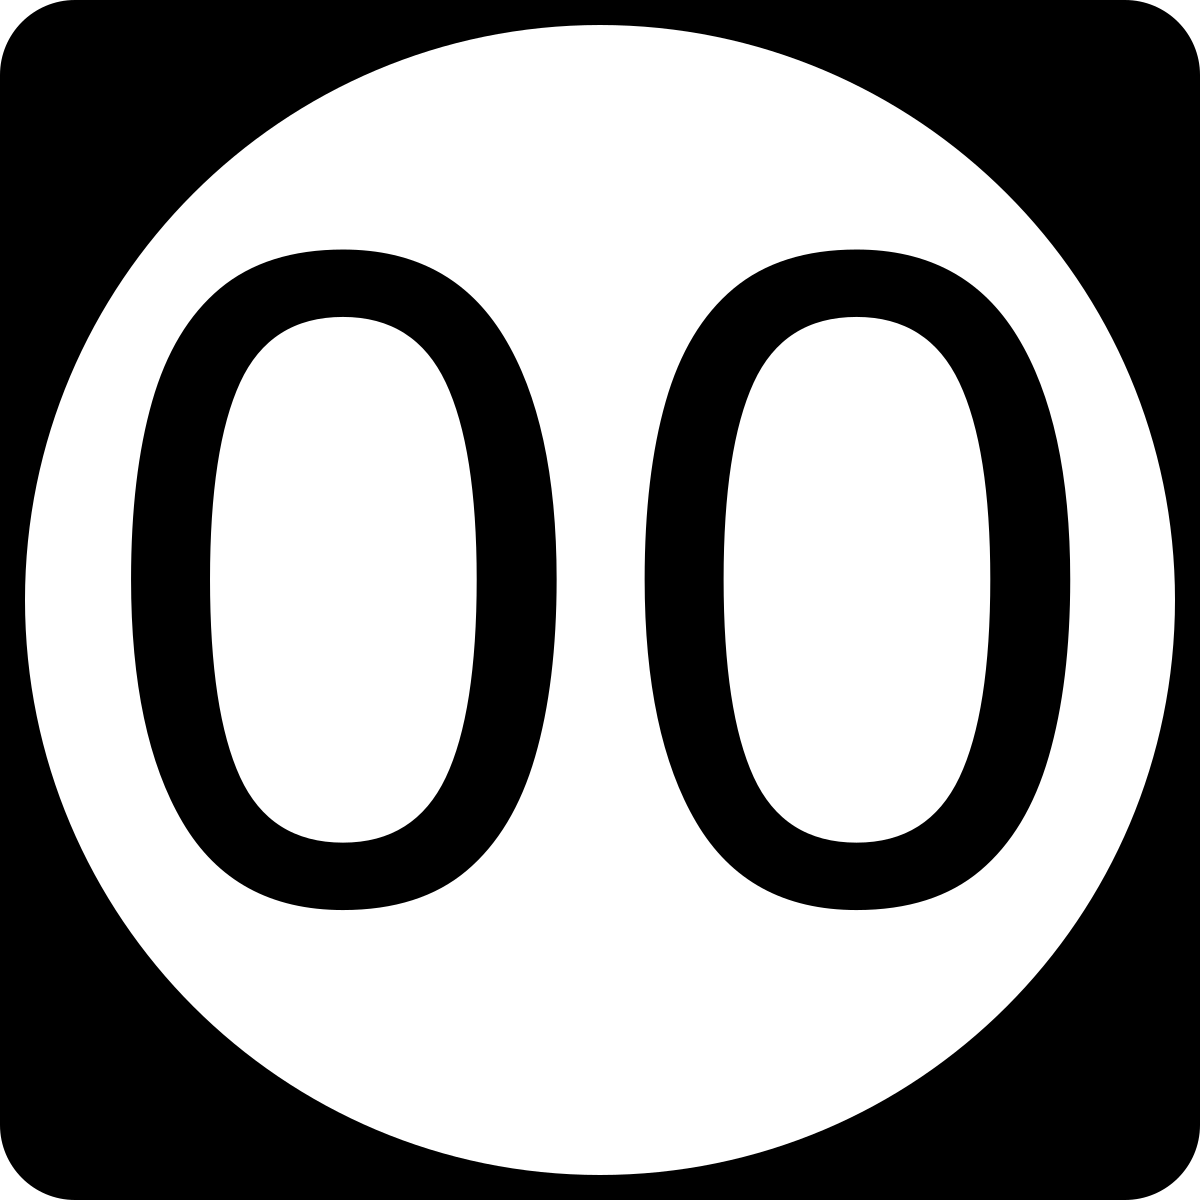 File:Measured Circle Drawing Template or Stencil.JPG - Wikimedia